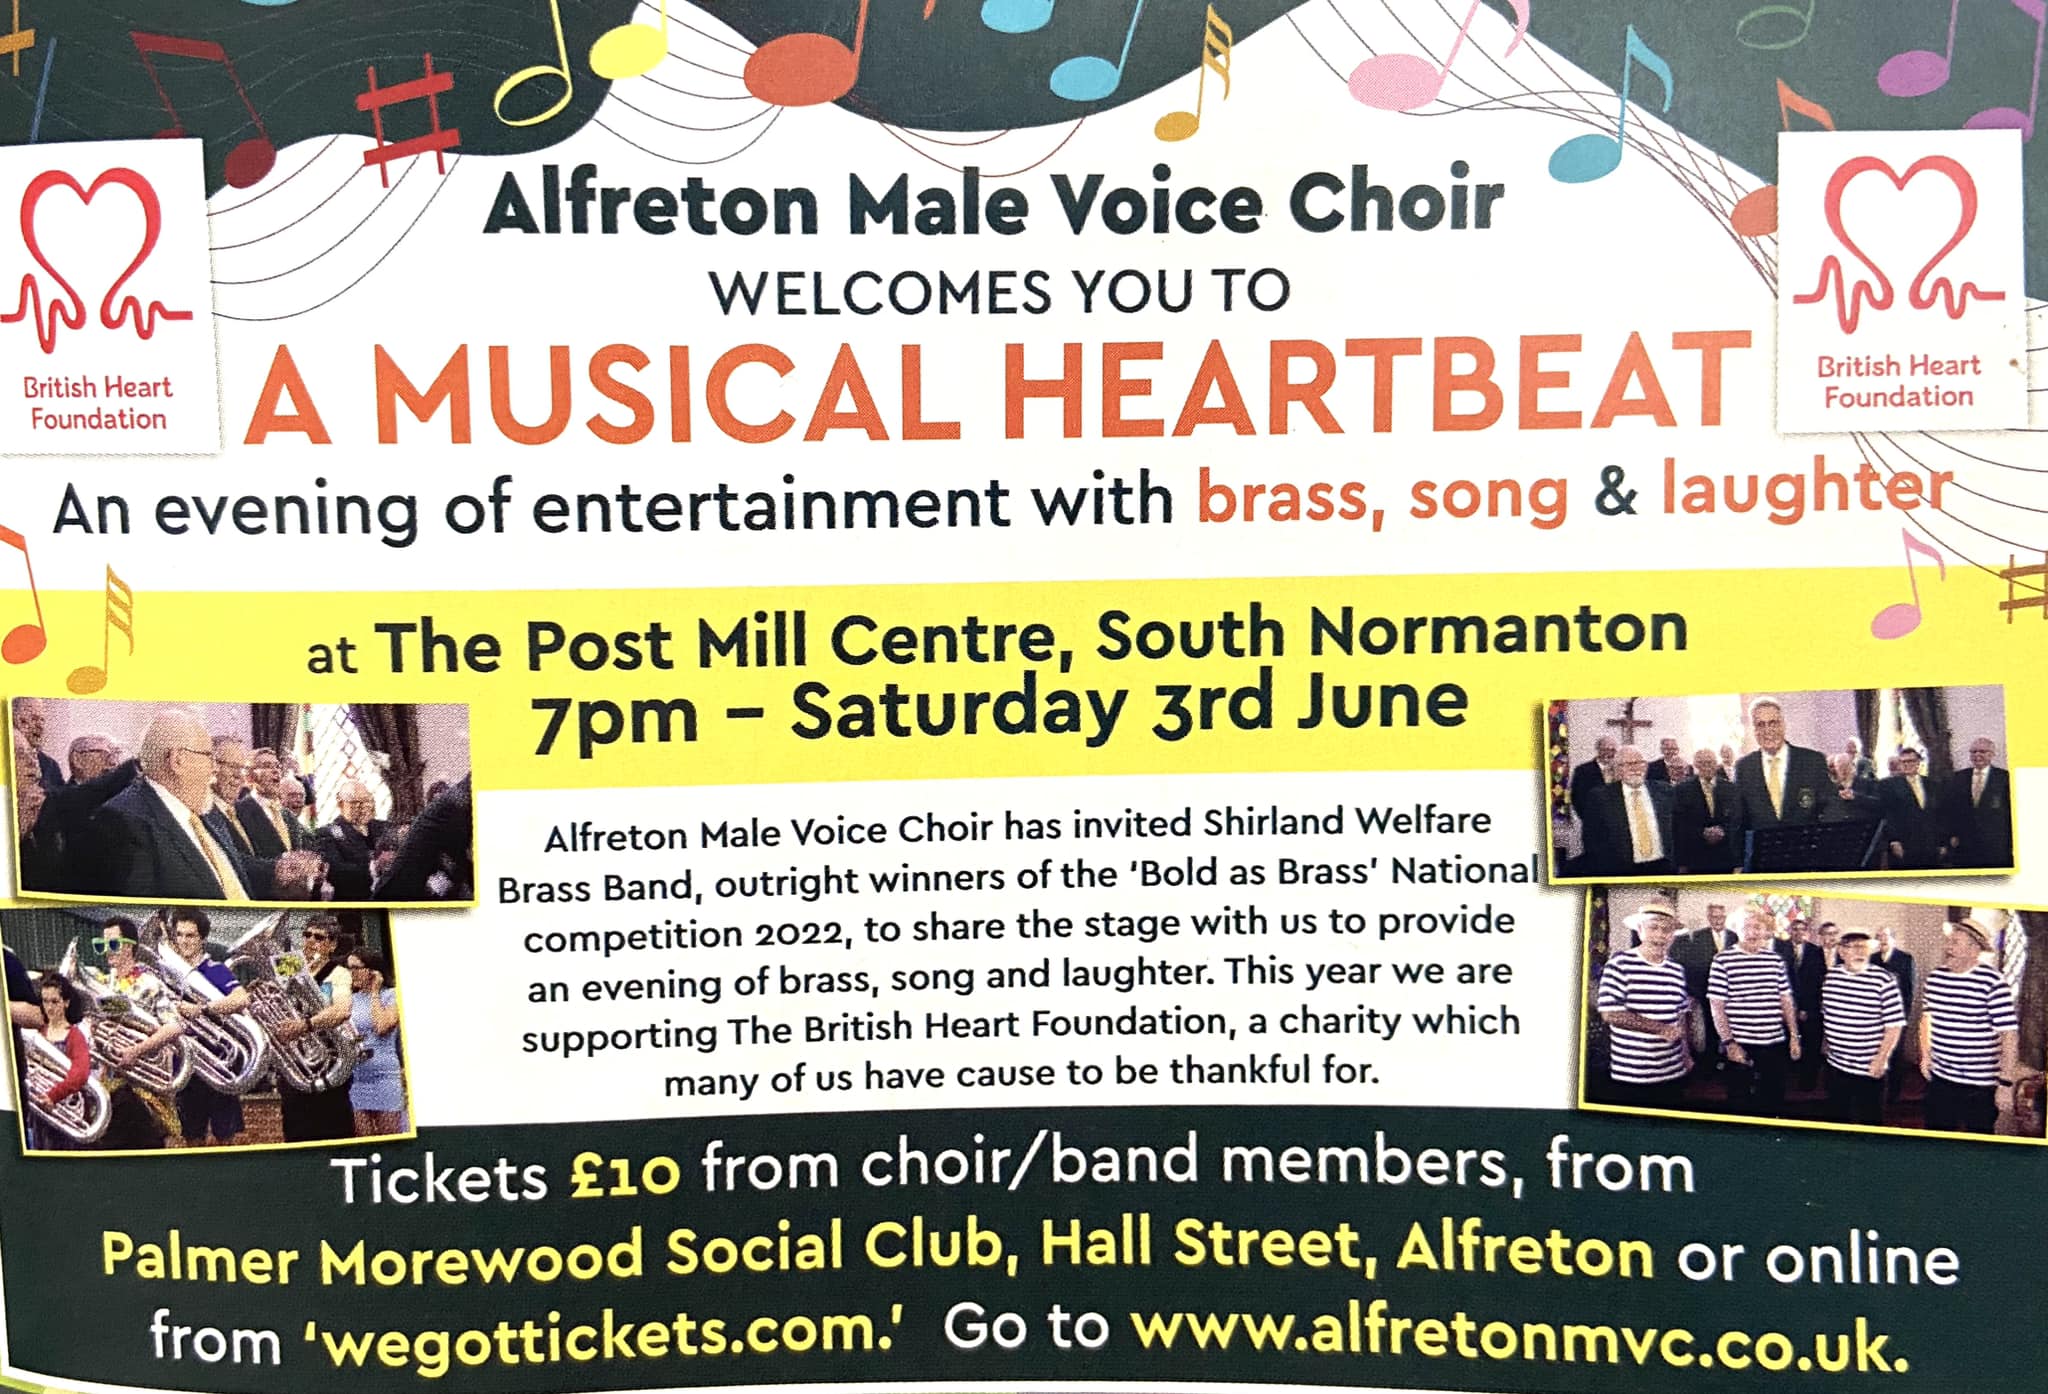 Alfreton Male Voice Choir will present a Musical Heartbeat